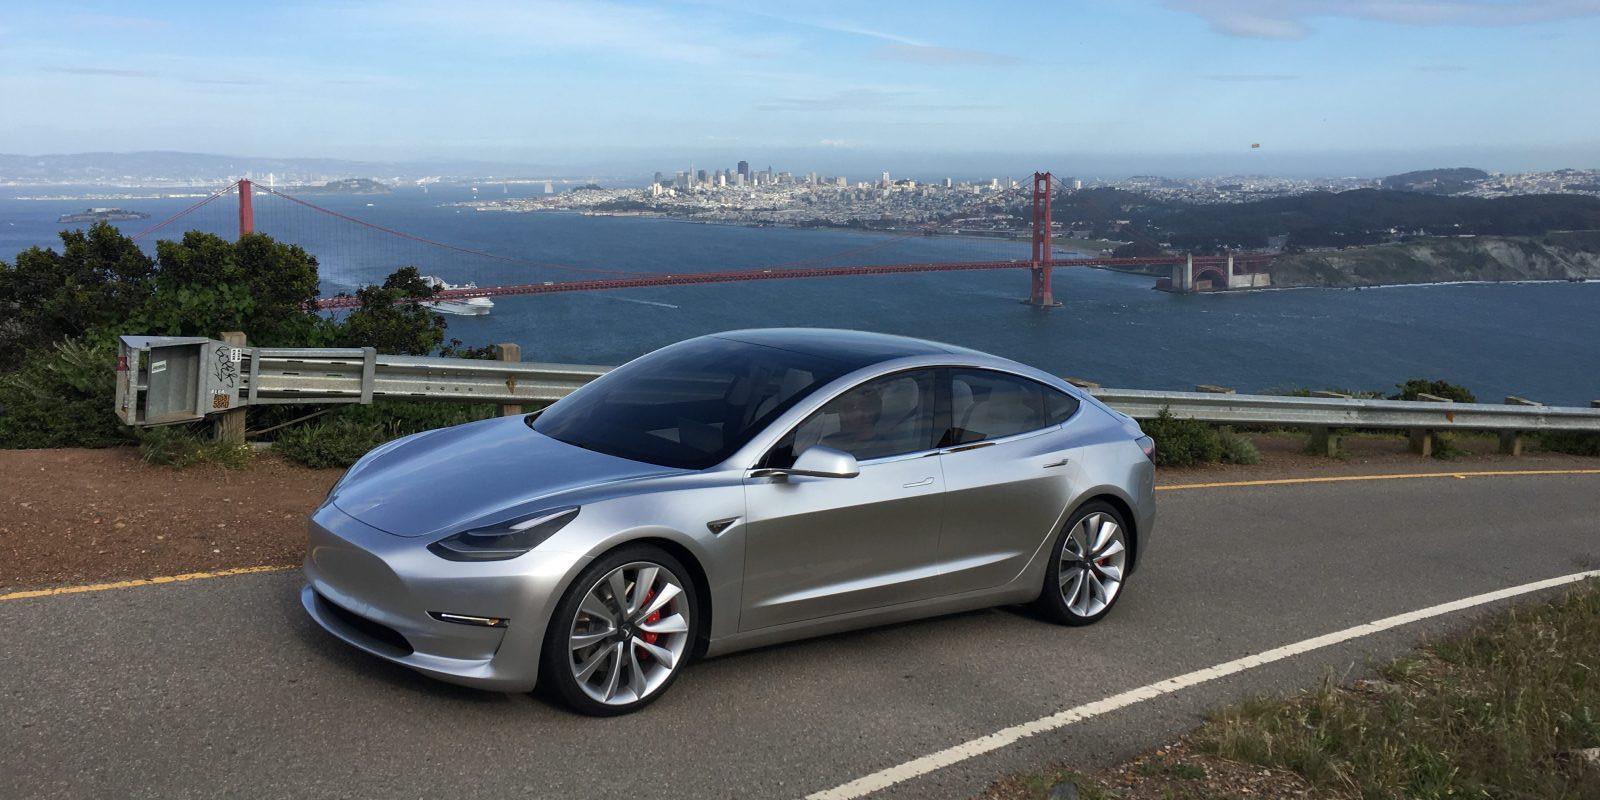 New Tesla Model 3 promo high-res shots of the silver prototype emerge [Gallery] | Electrek